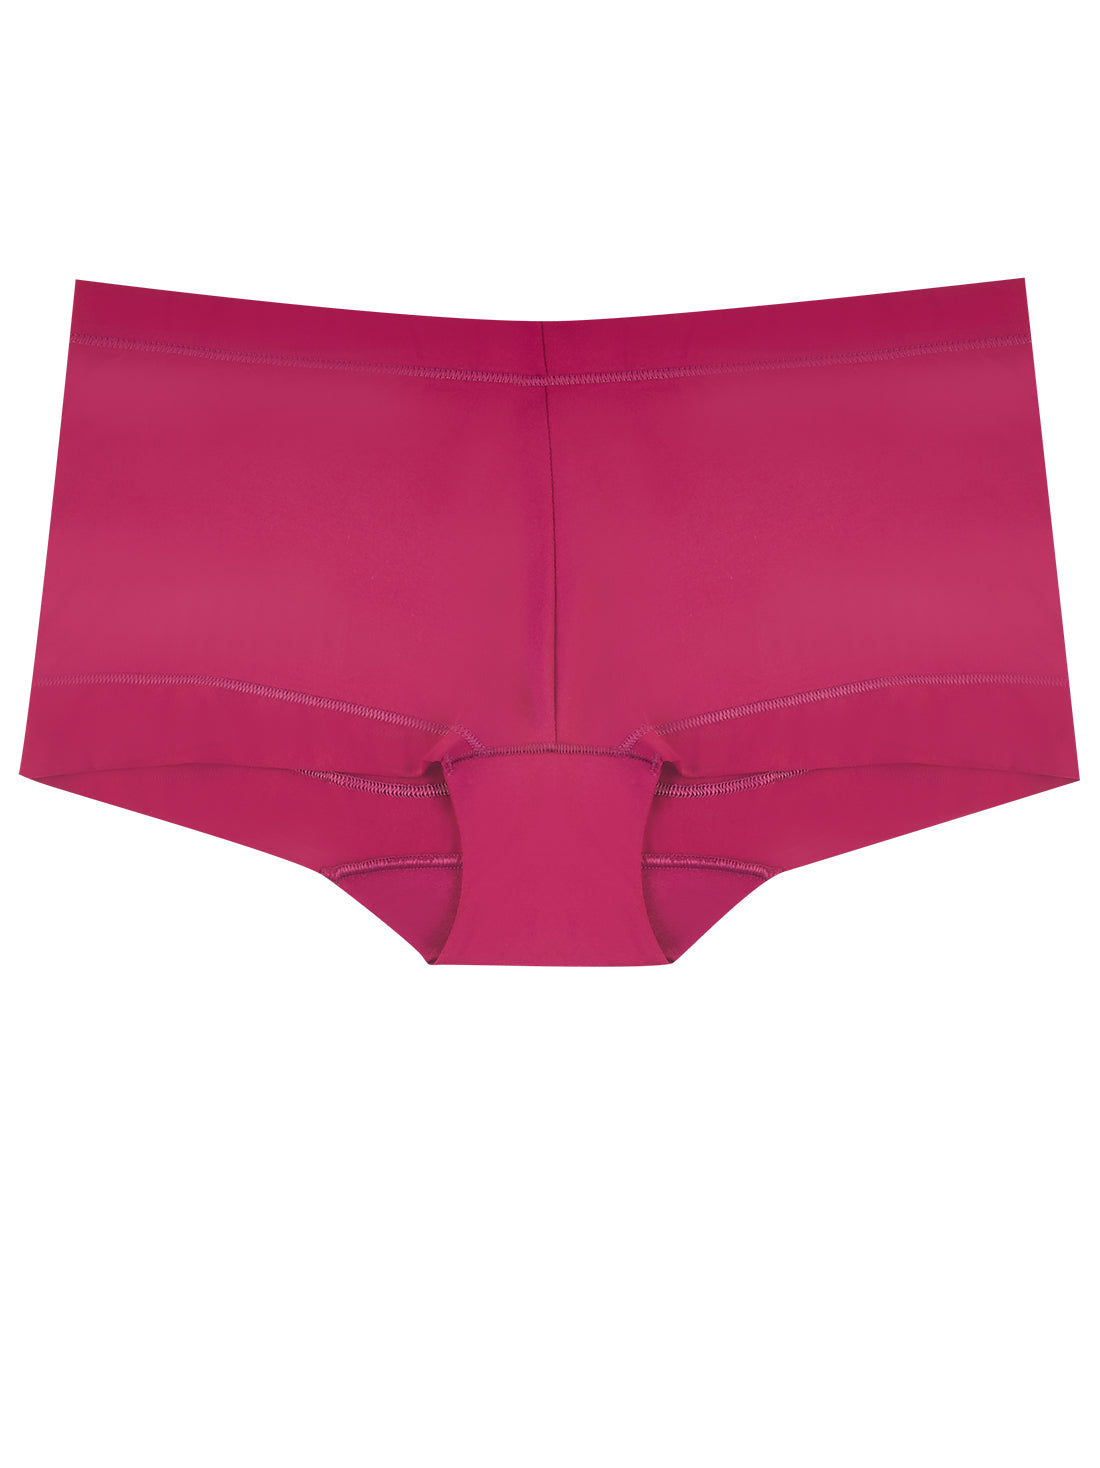 BIZIZA Women's Boyshort Underwear High Waisted Butt Lifter Shorts Hipster  Seamless Stretch Panty Pink XXL